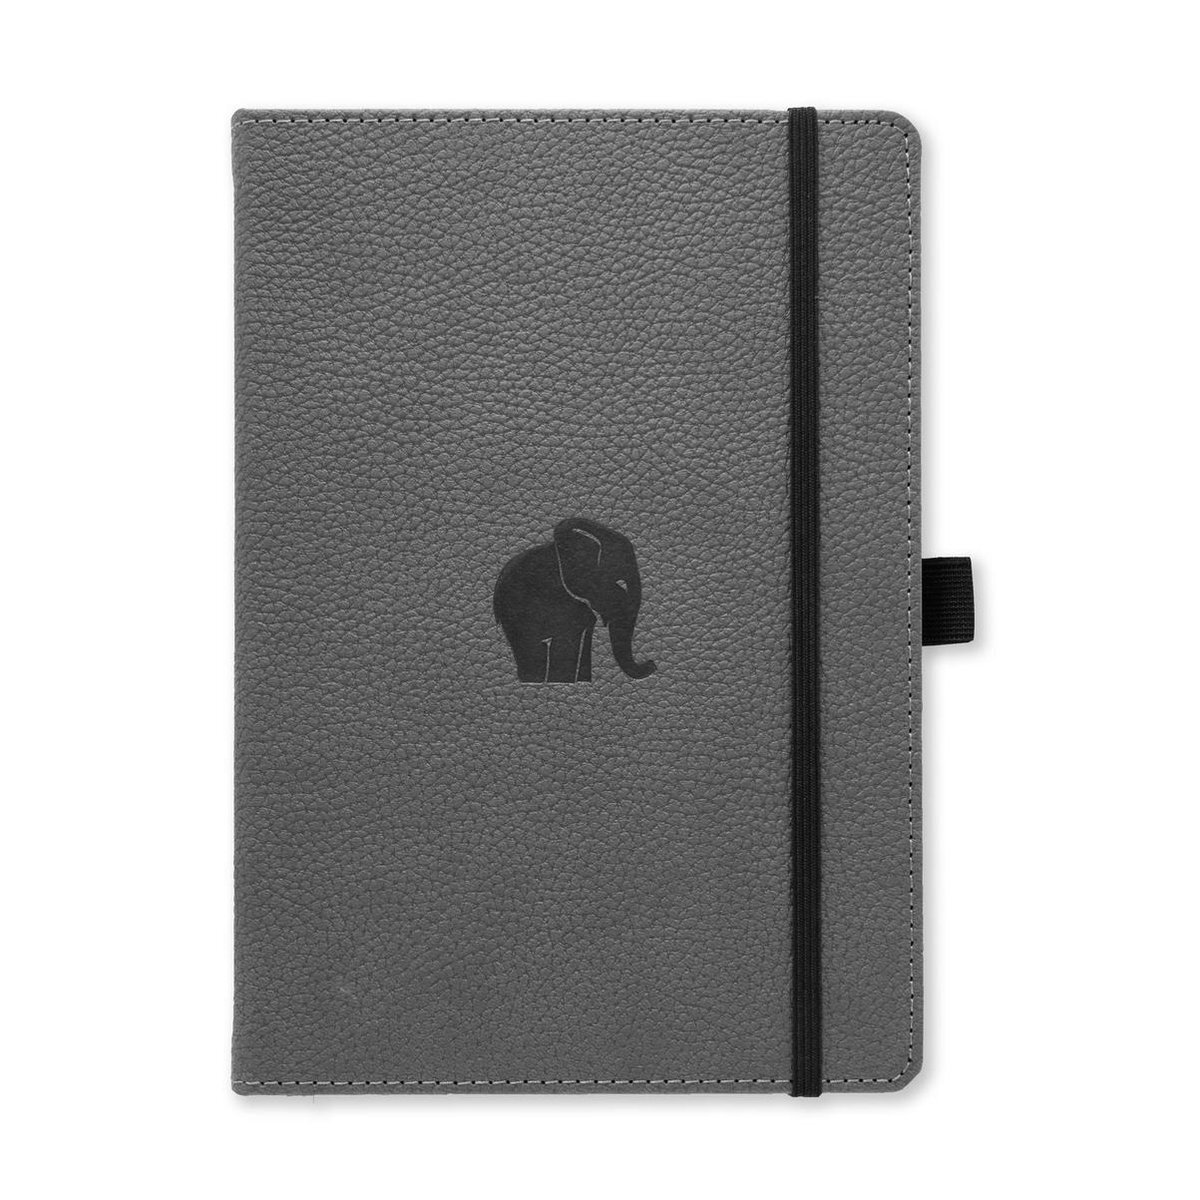 Dingbats Notebooks Dingbats A5+ Wildlife Grey Elephant Notebook - Dotted